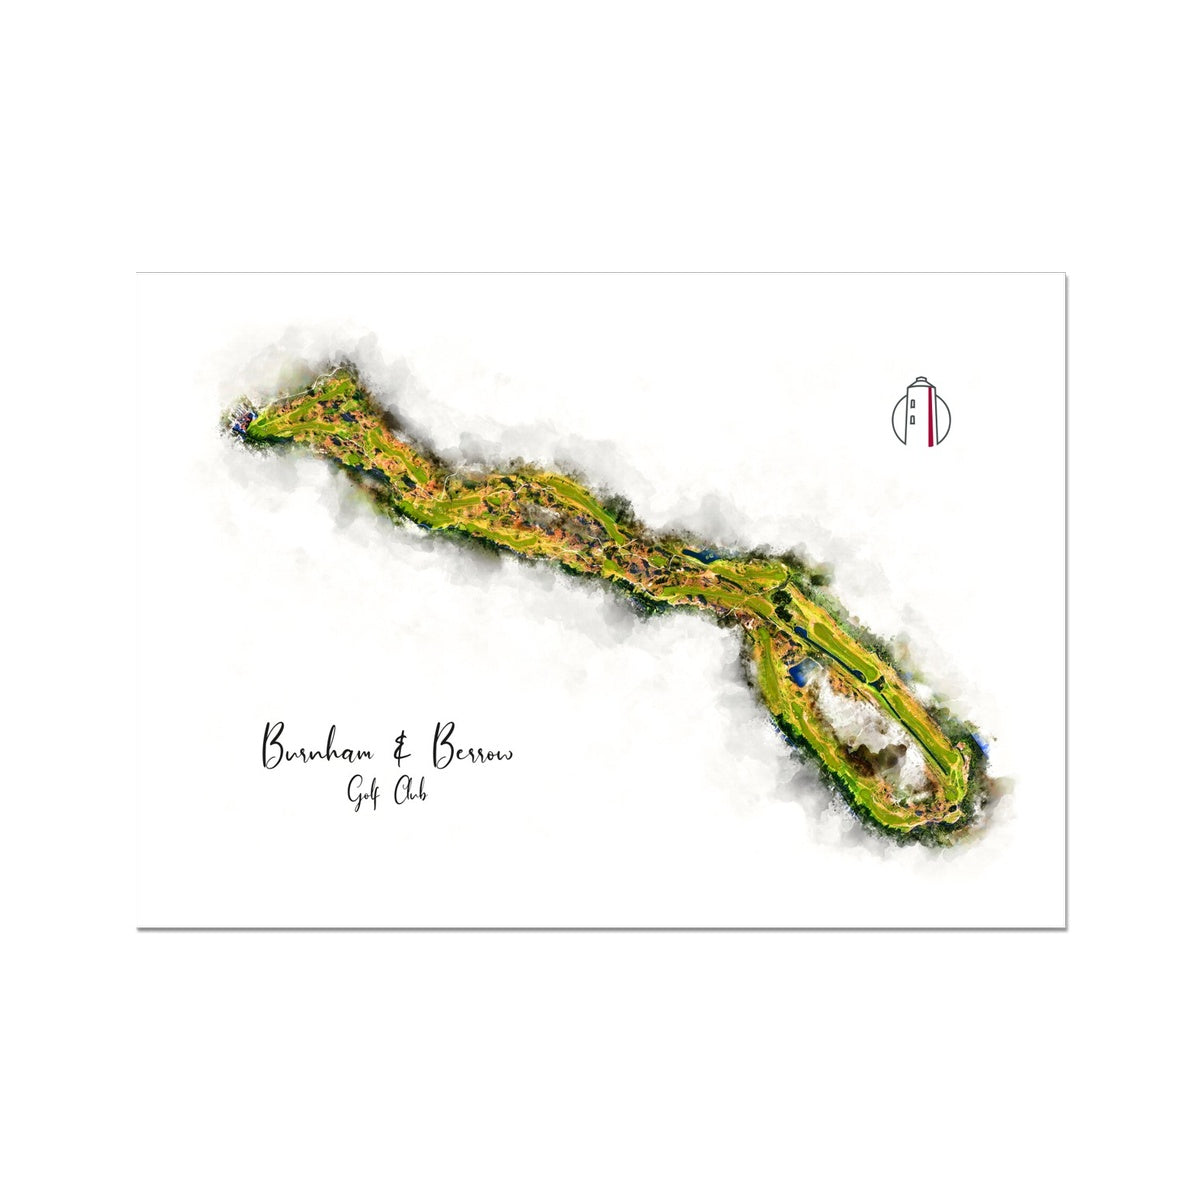 Artwork of the complete course map of Burnham & Berrow Golf Club.